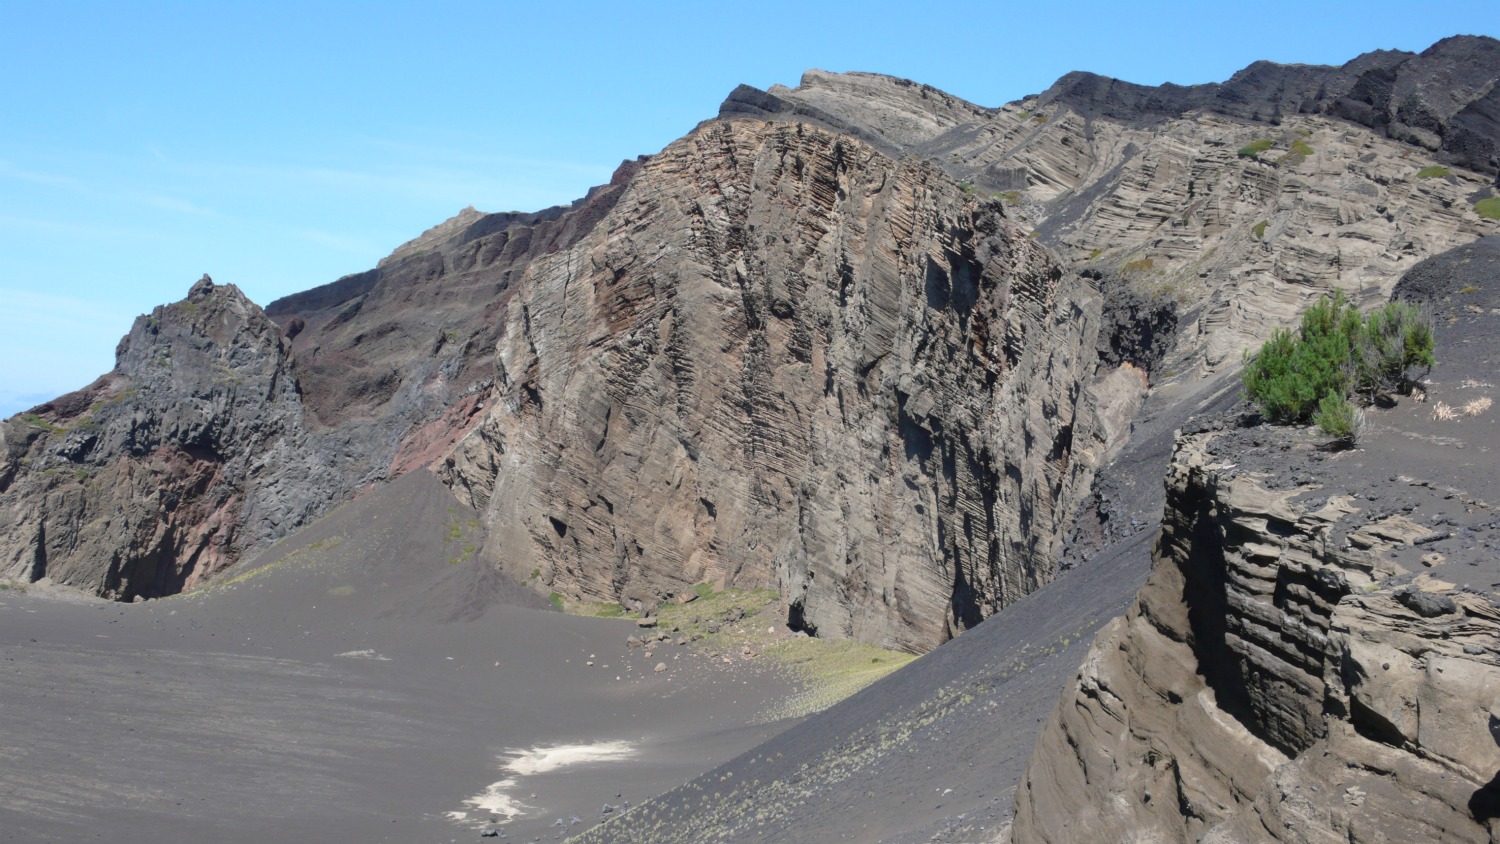 Capelinhos eruption site in Faial.